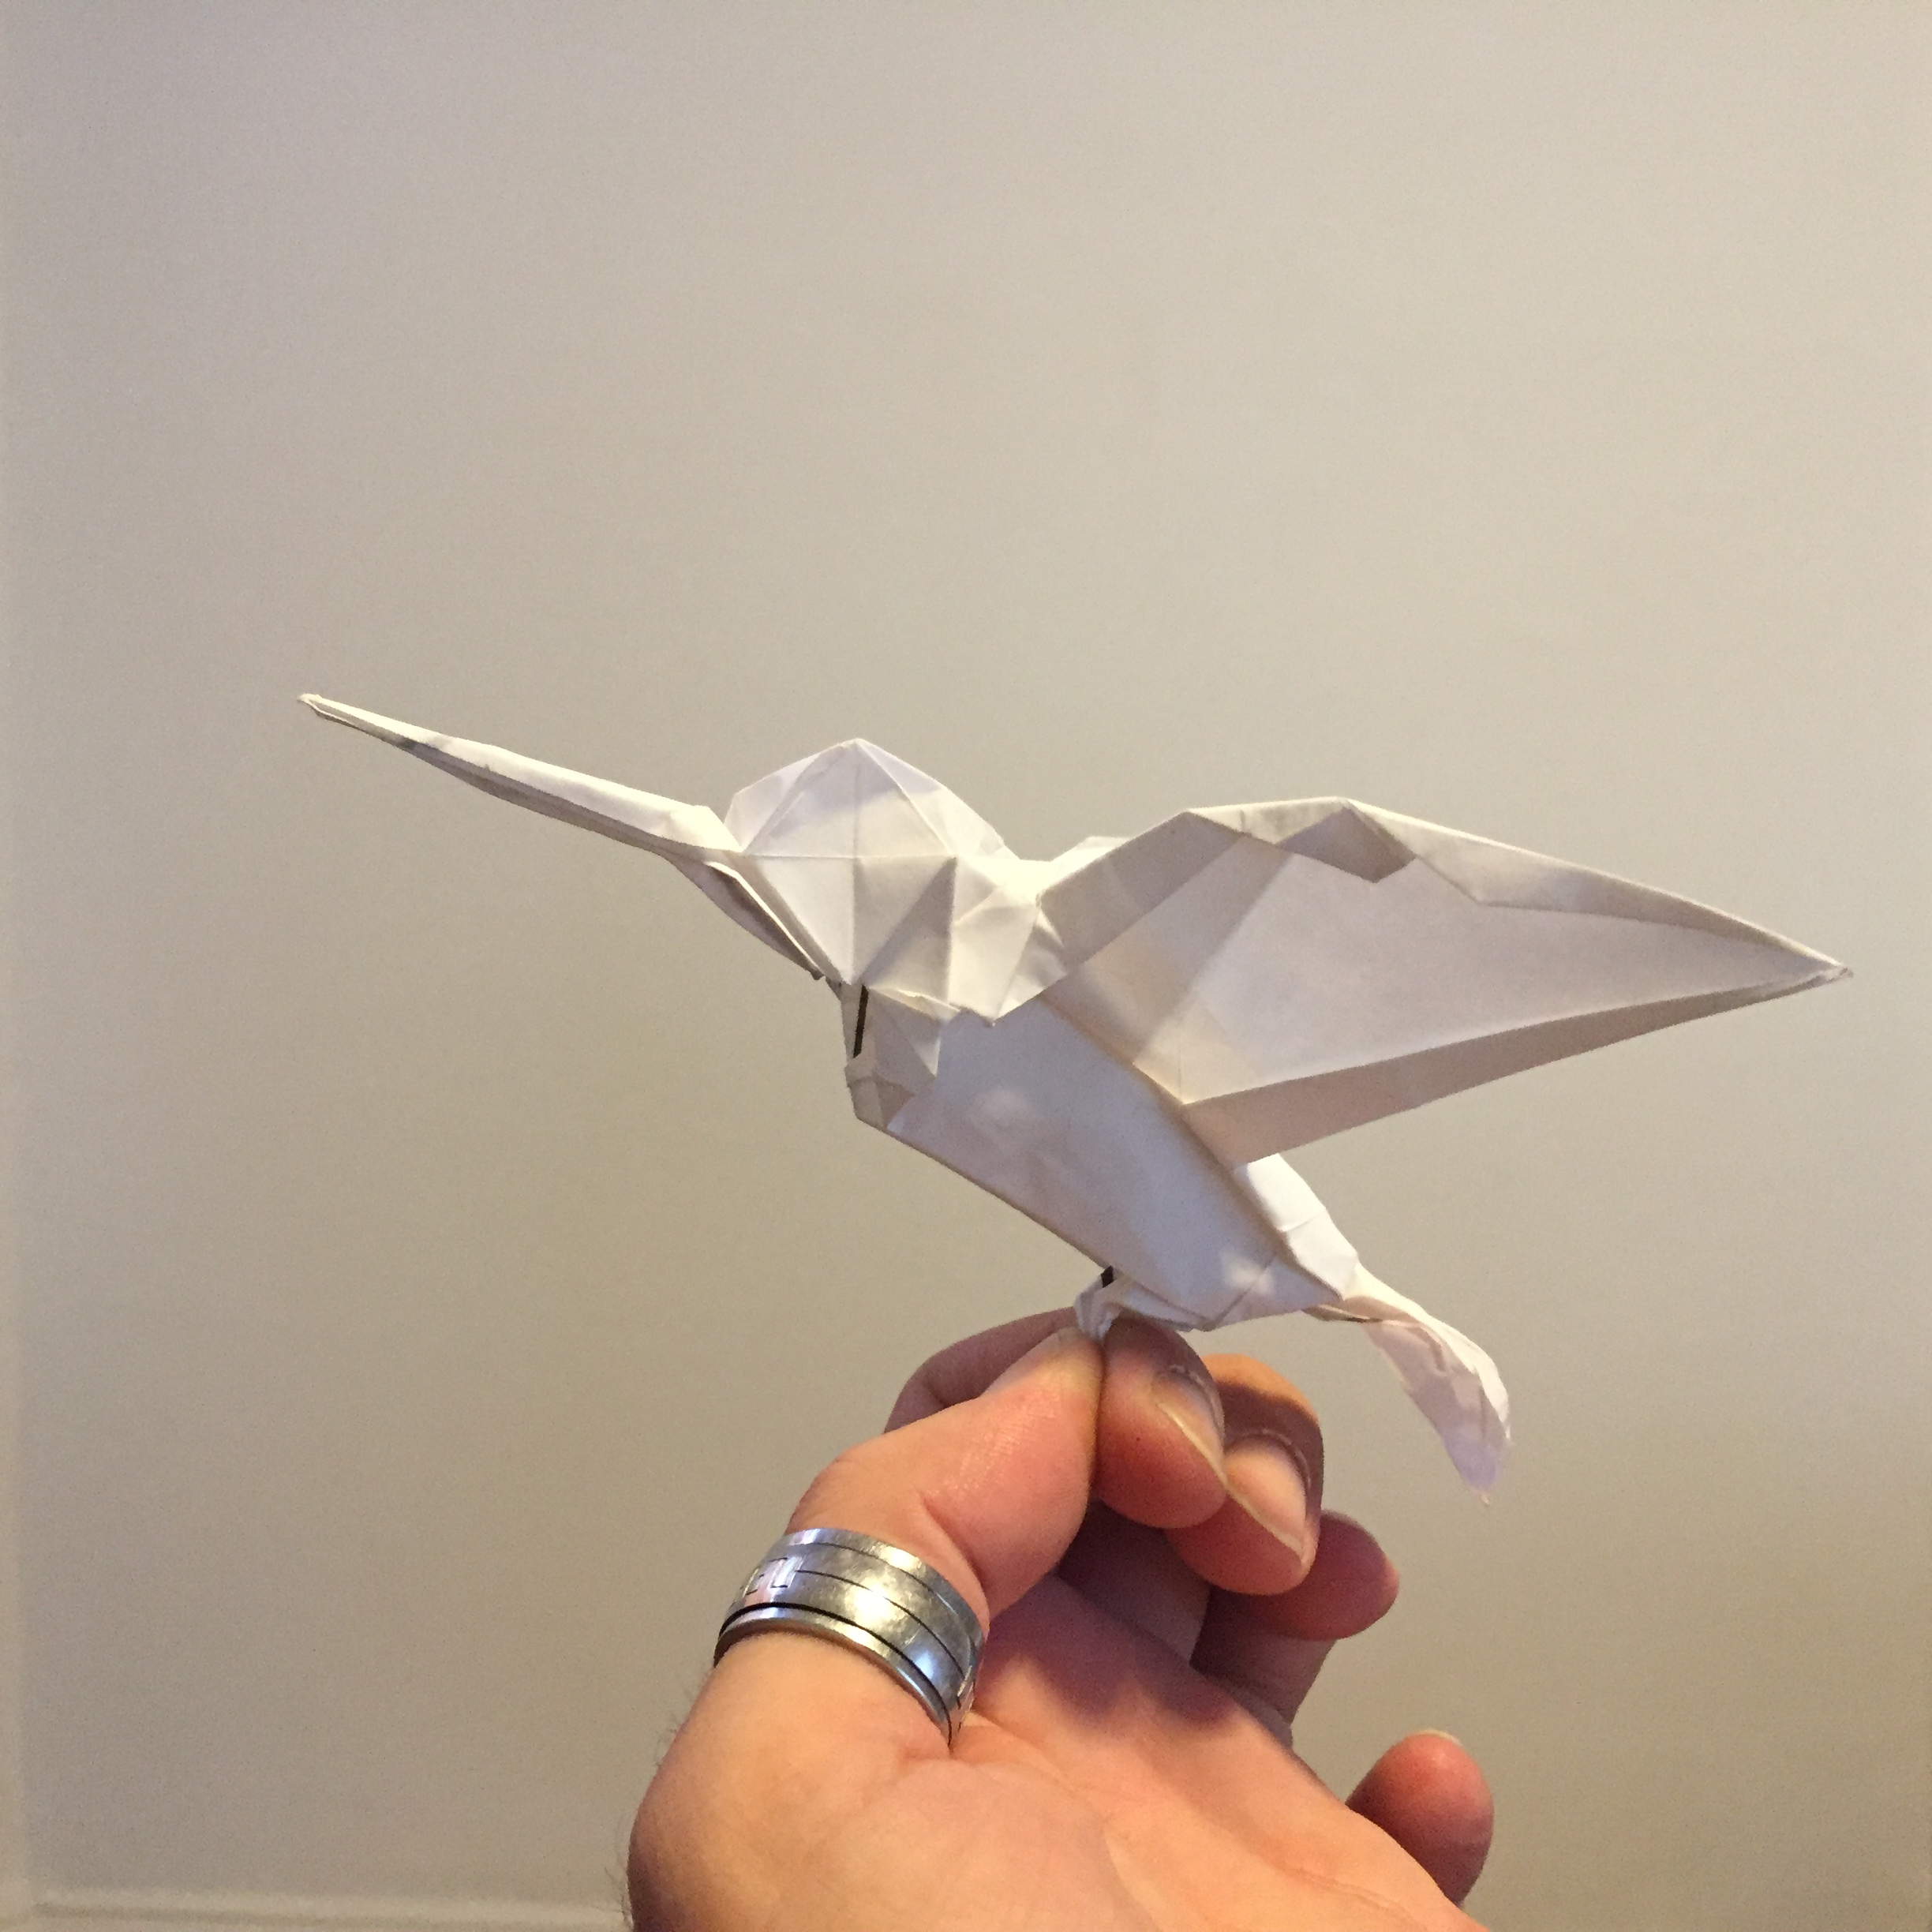 Origami Hummingbird Tutorial 3d Hummingbird Designed Me Folded With Some Kind Of